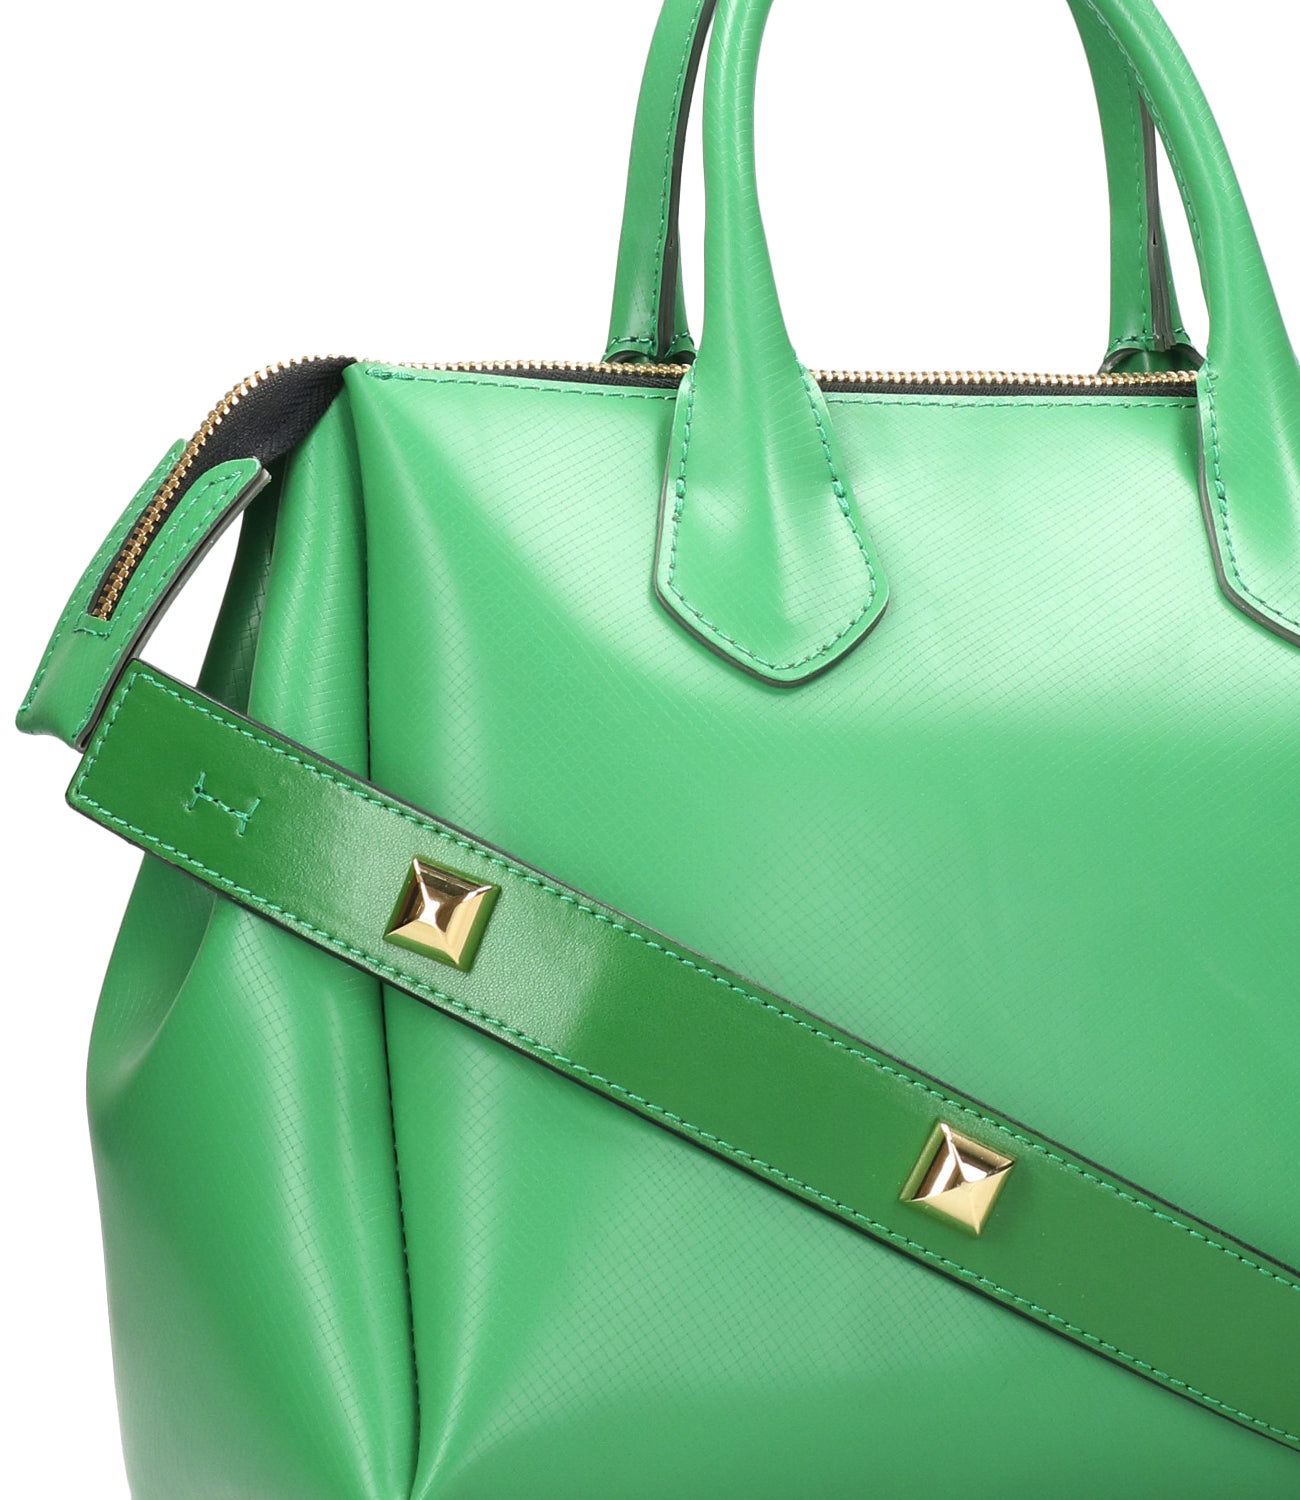 Gum design | Green bag